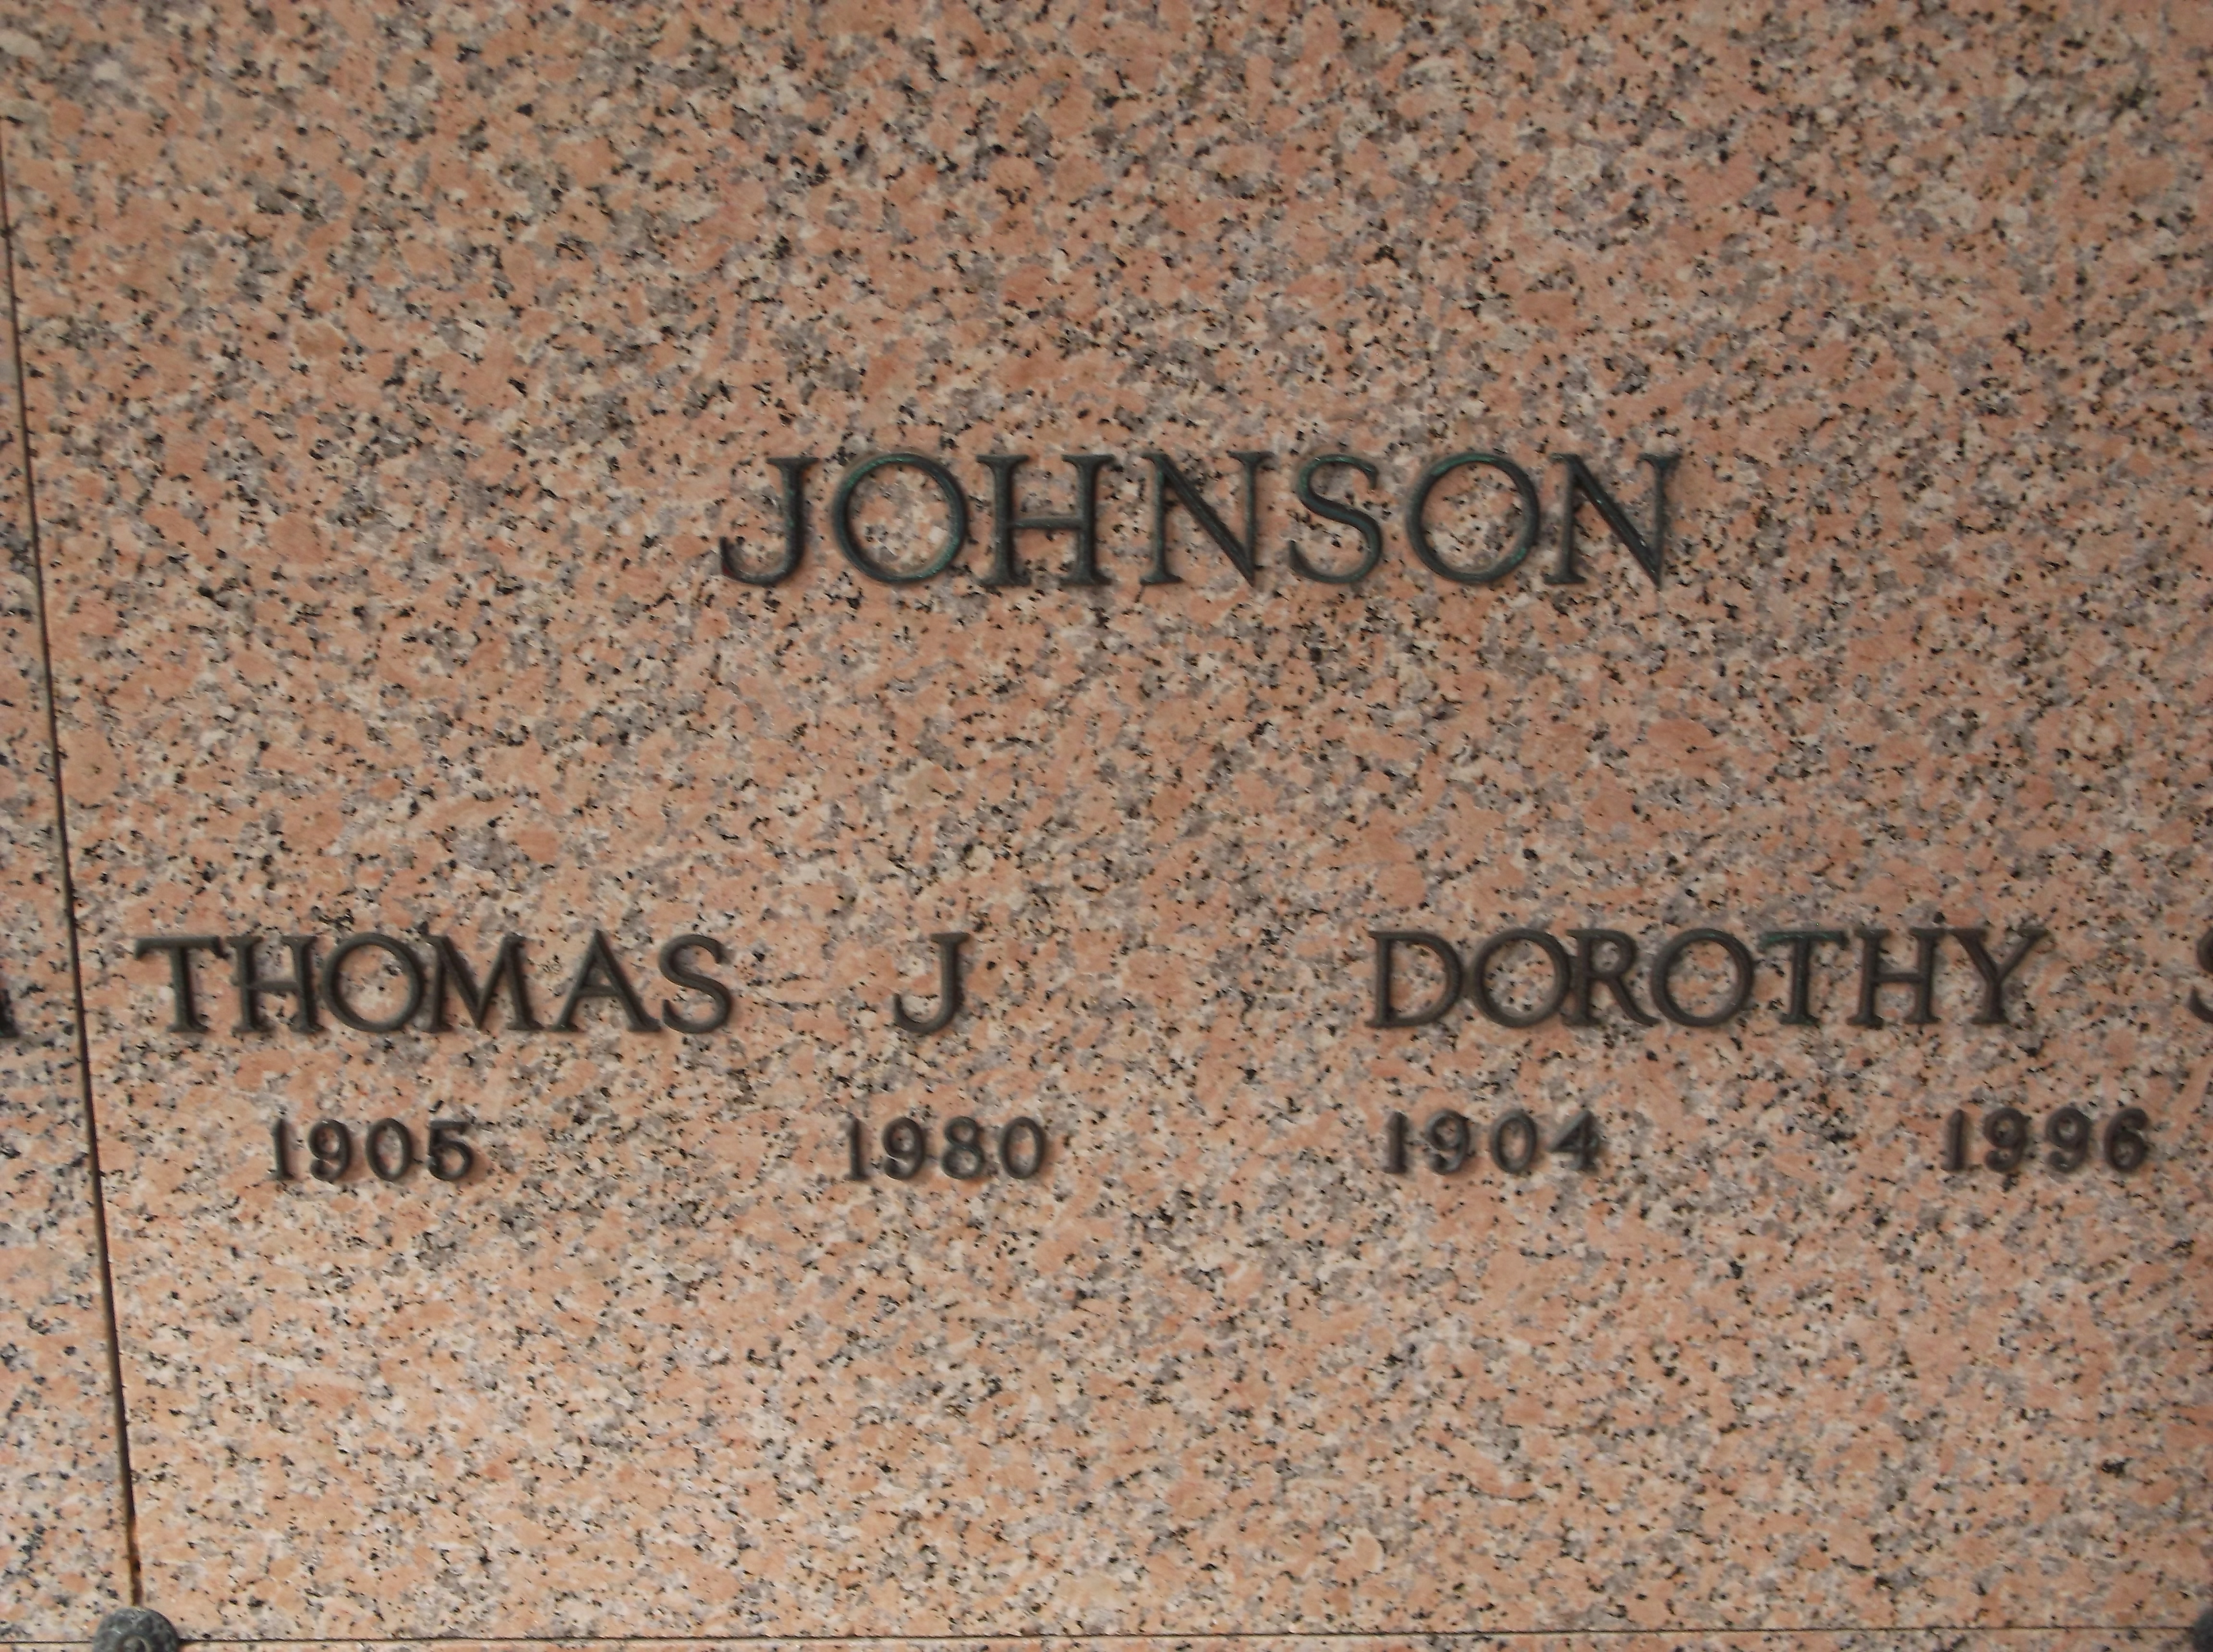 Thomas J Johnson